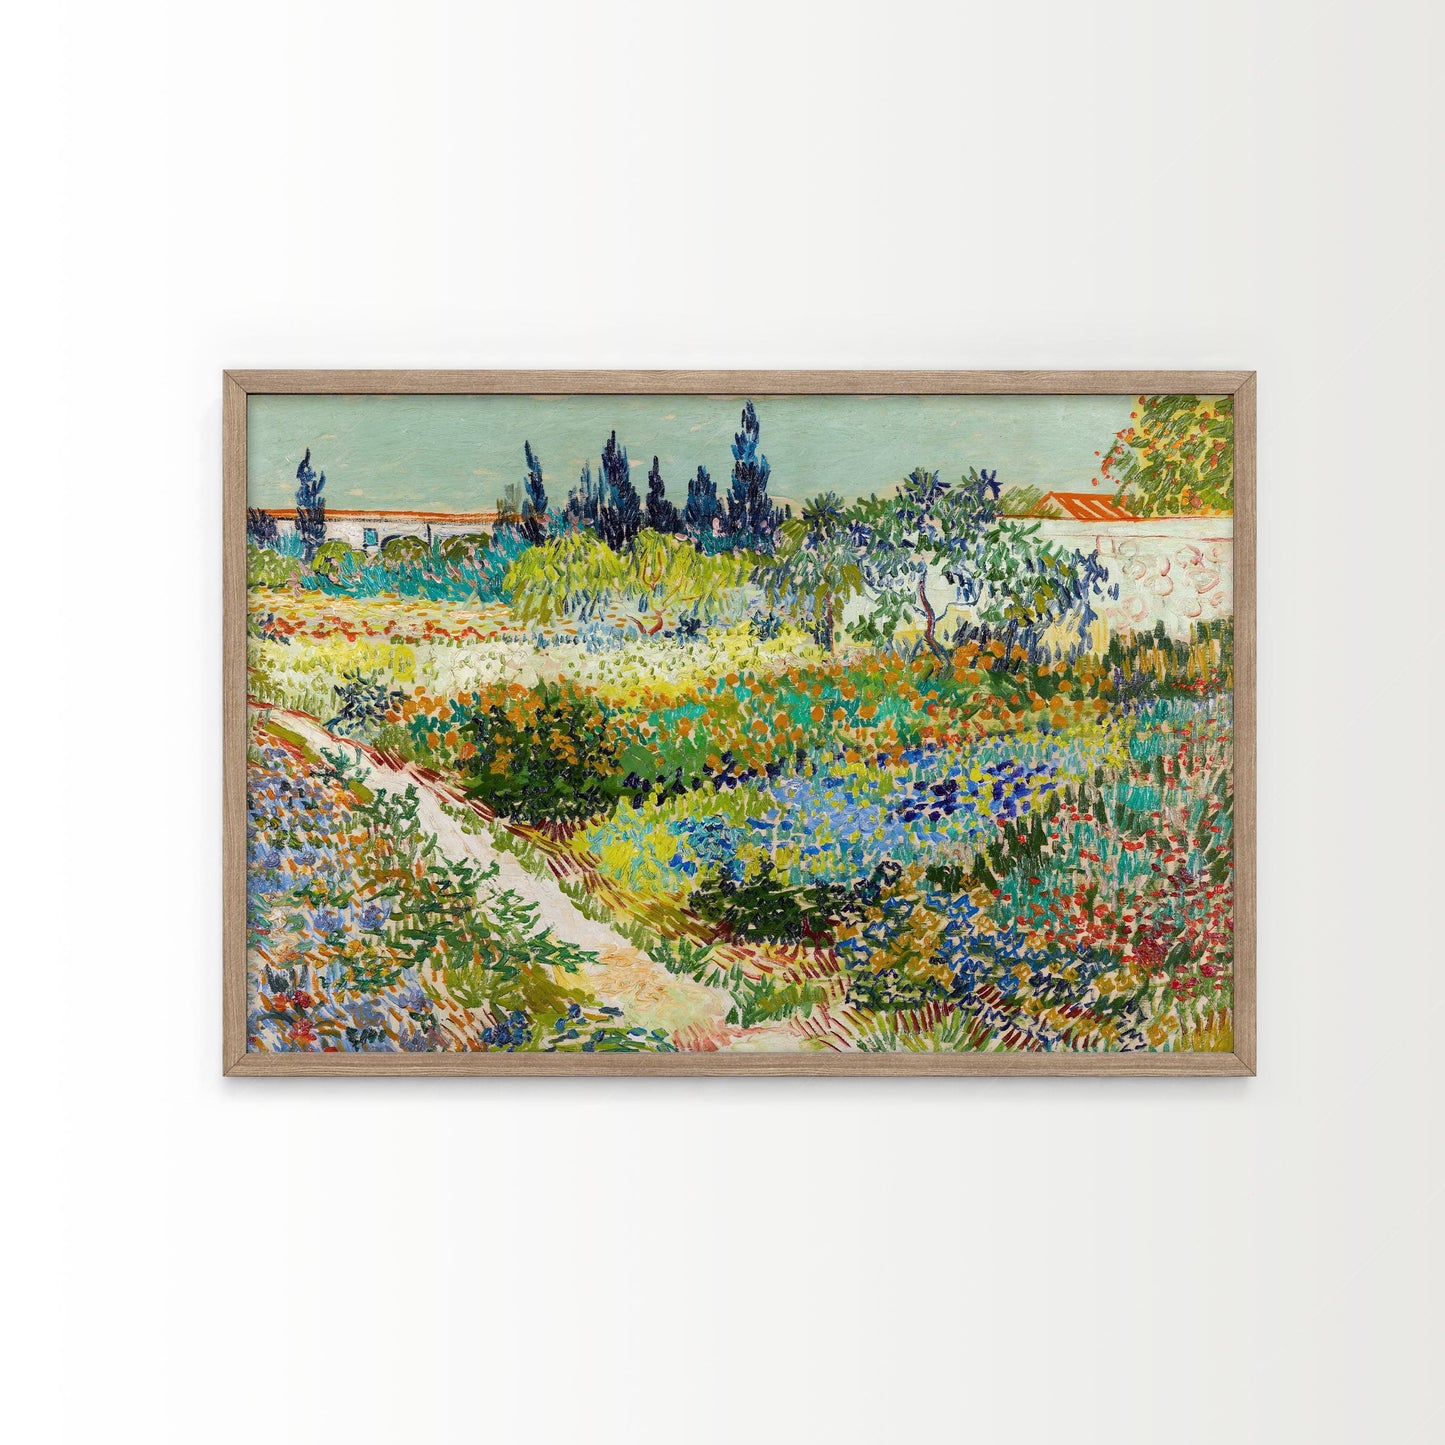 Home Poster Decor Van Gogh, A Lane in a Public Garden in Arles, Wall Art Poster